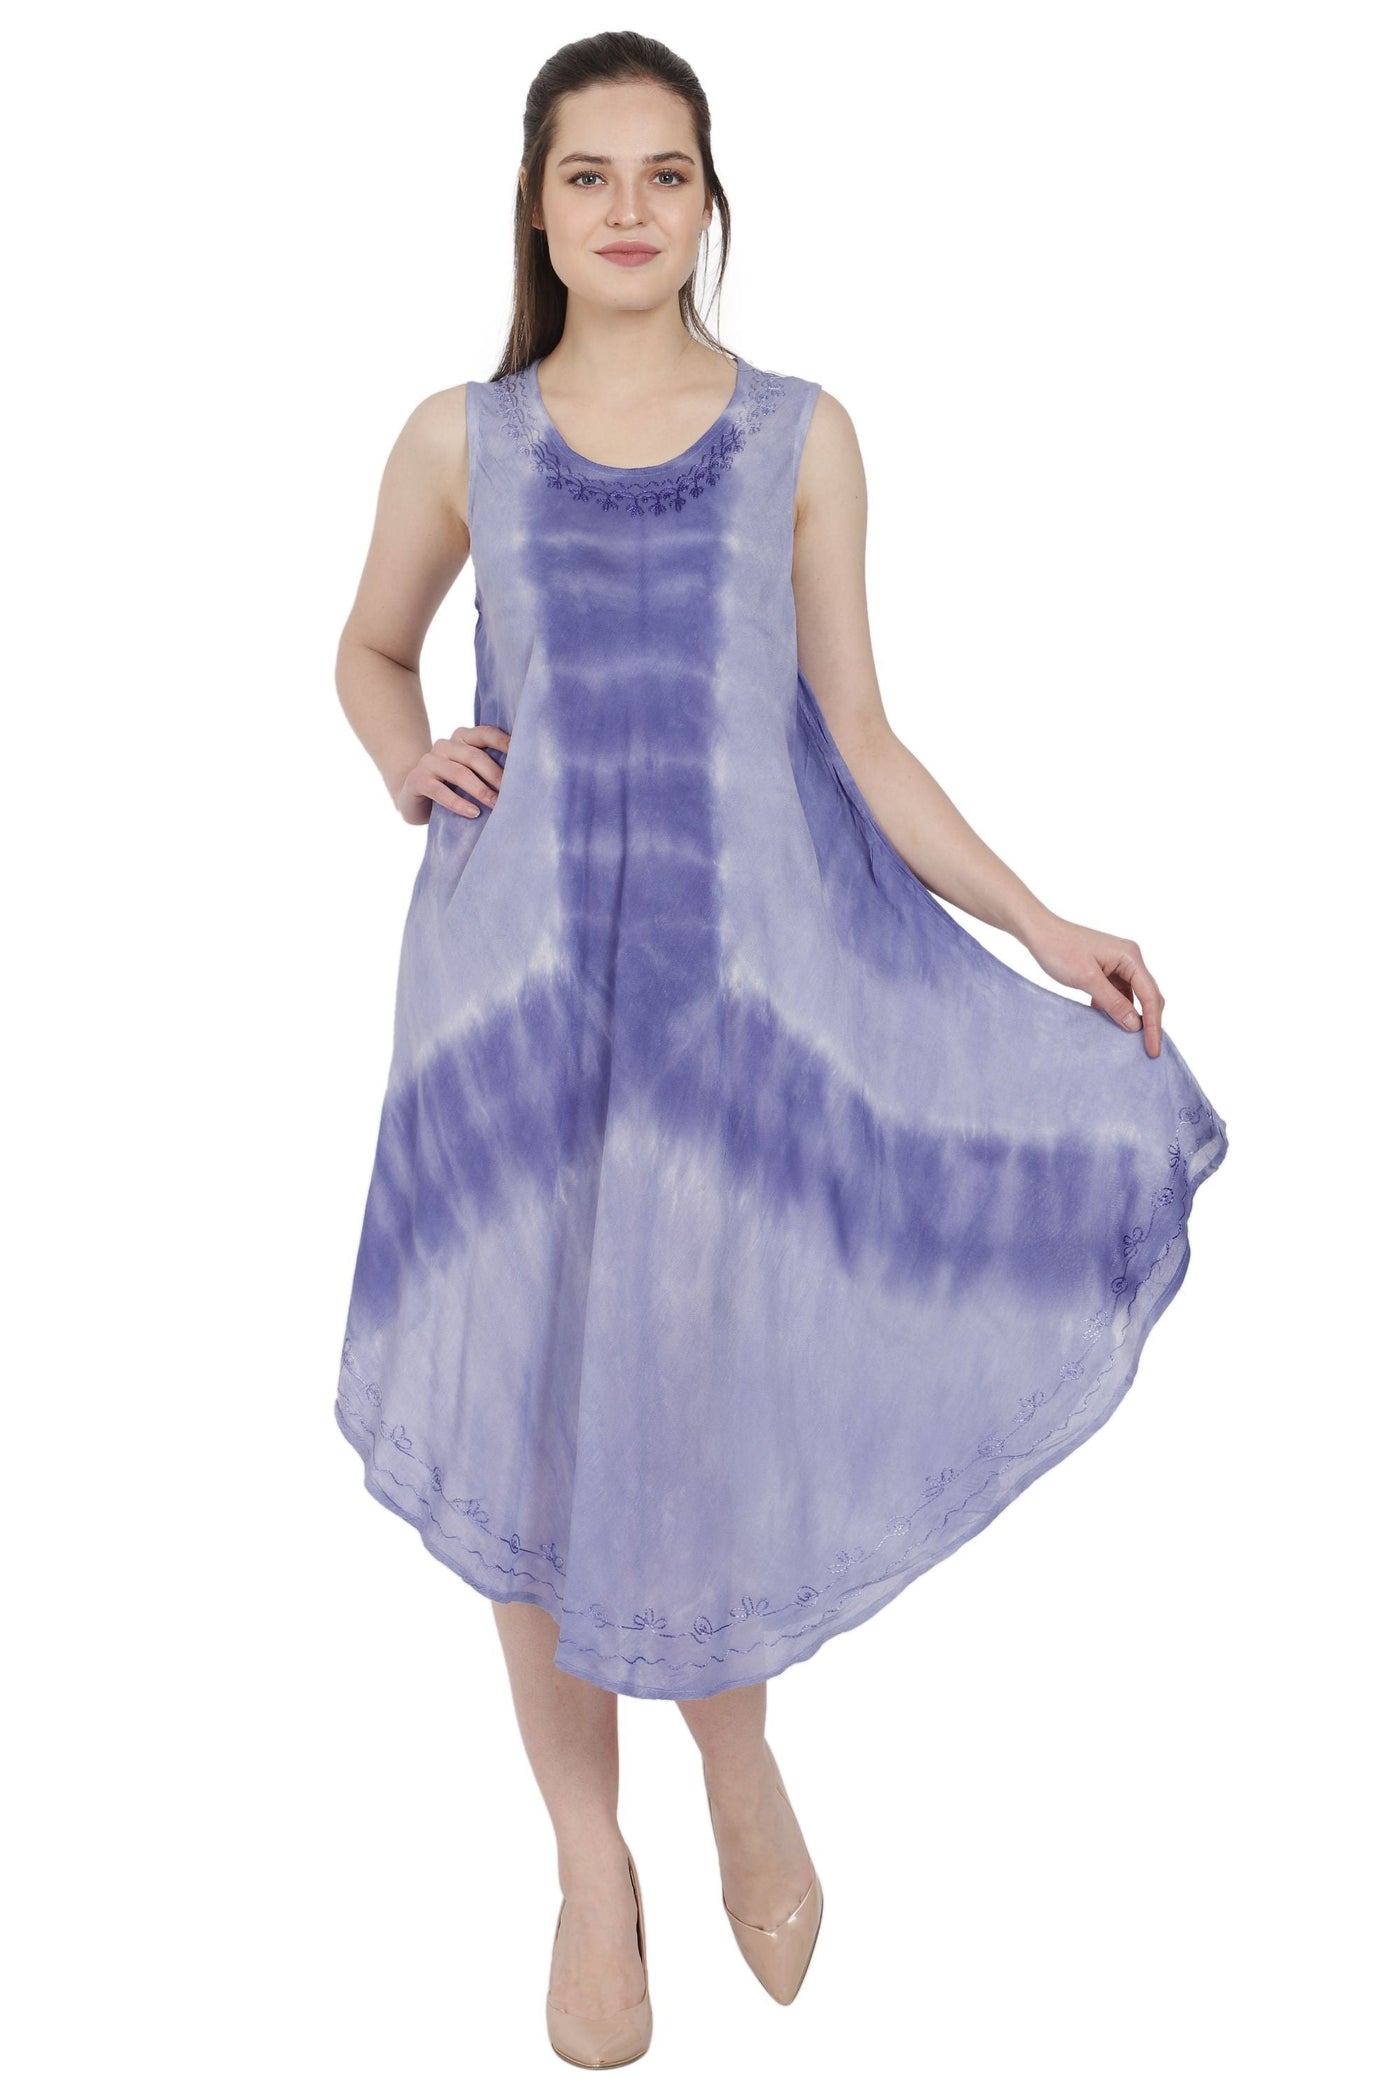 Trifecta Tie Dye Beach Umbrella Dress UD48-2304